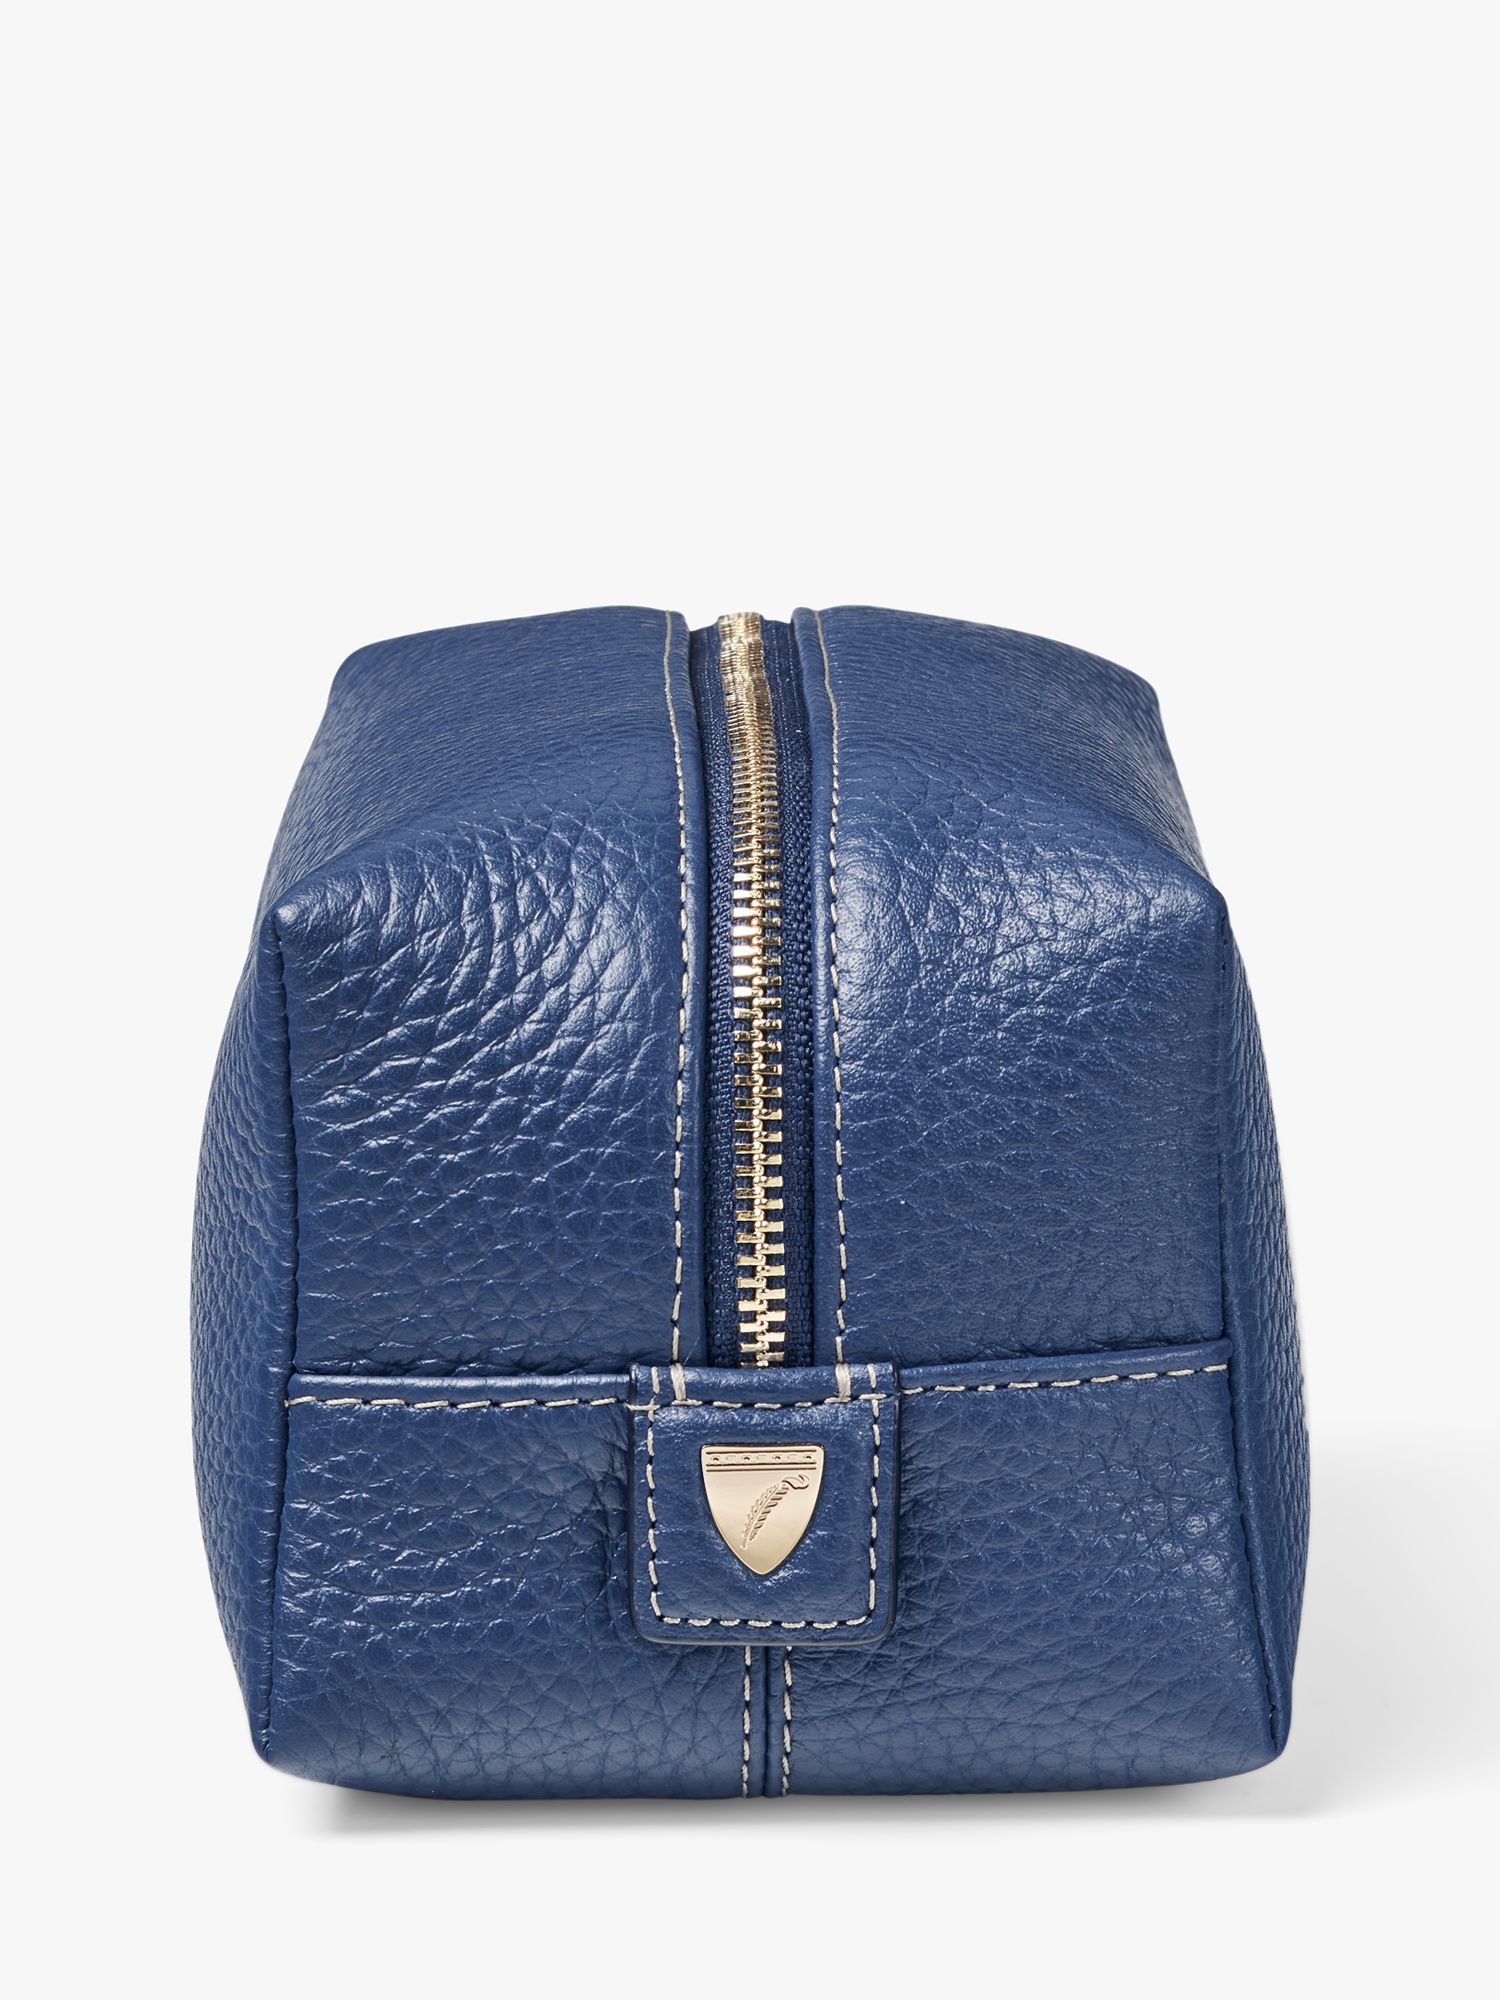 Aspinal of London Medium Leather London Case Toiletries Bag, Caspian Blue 3